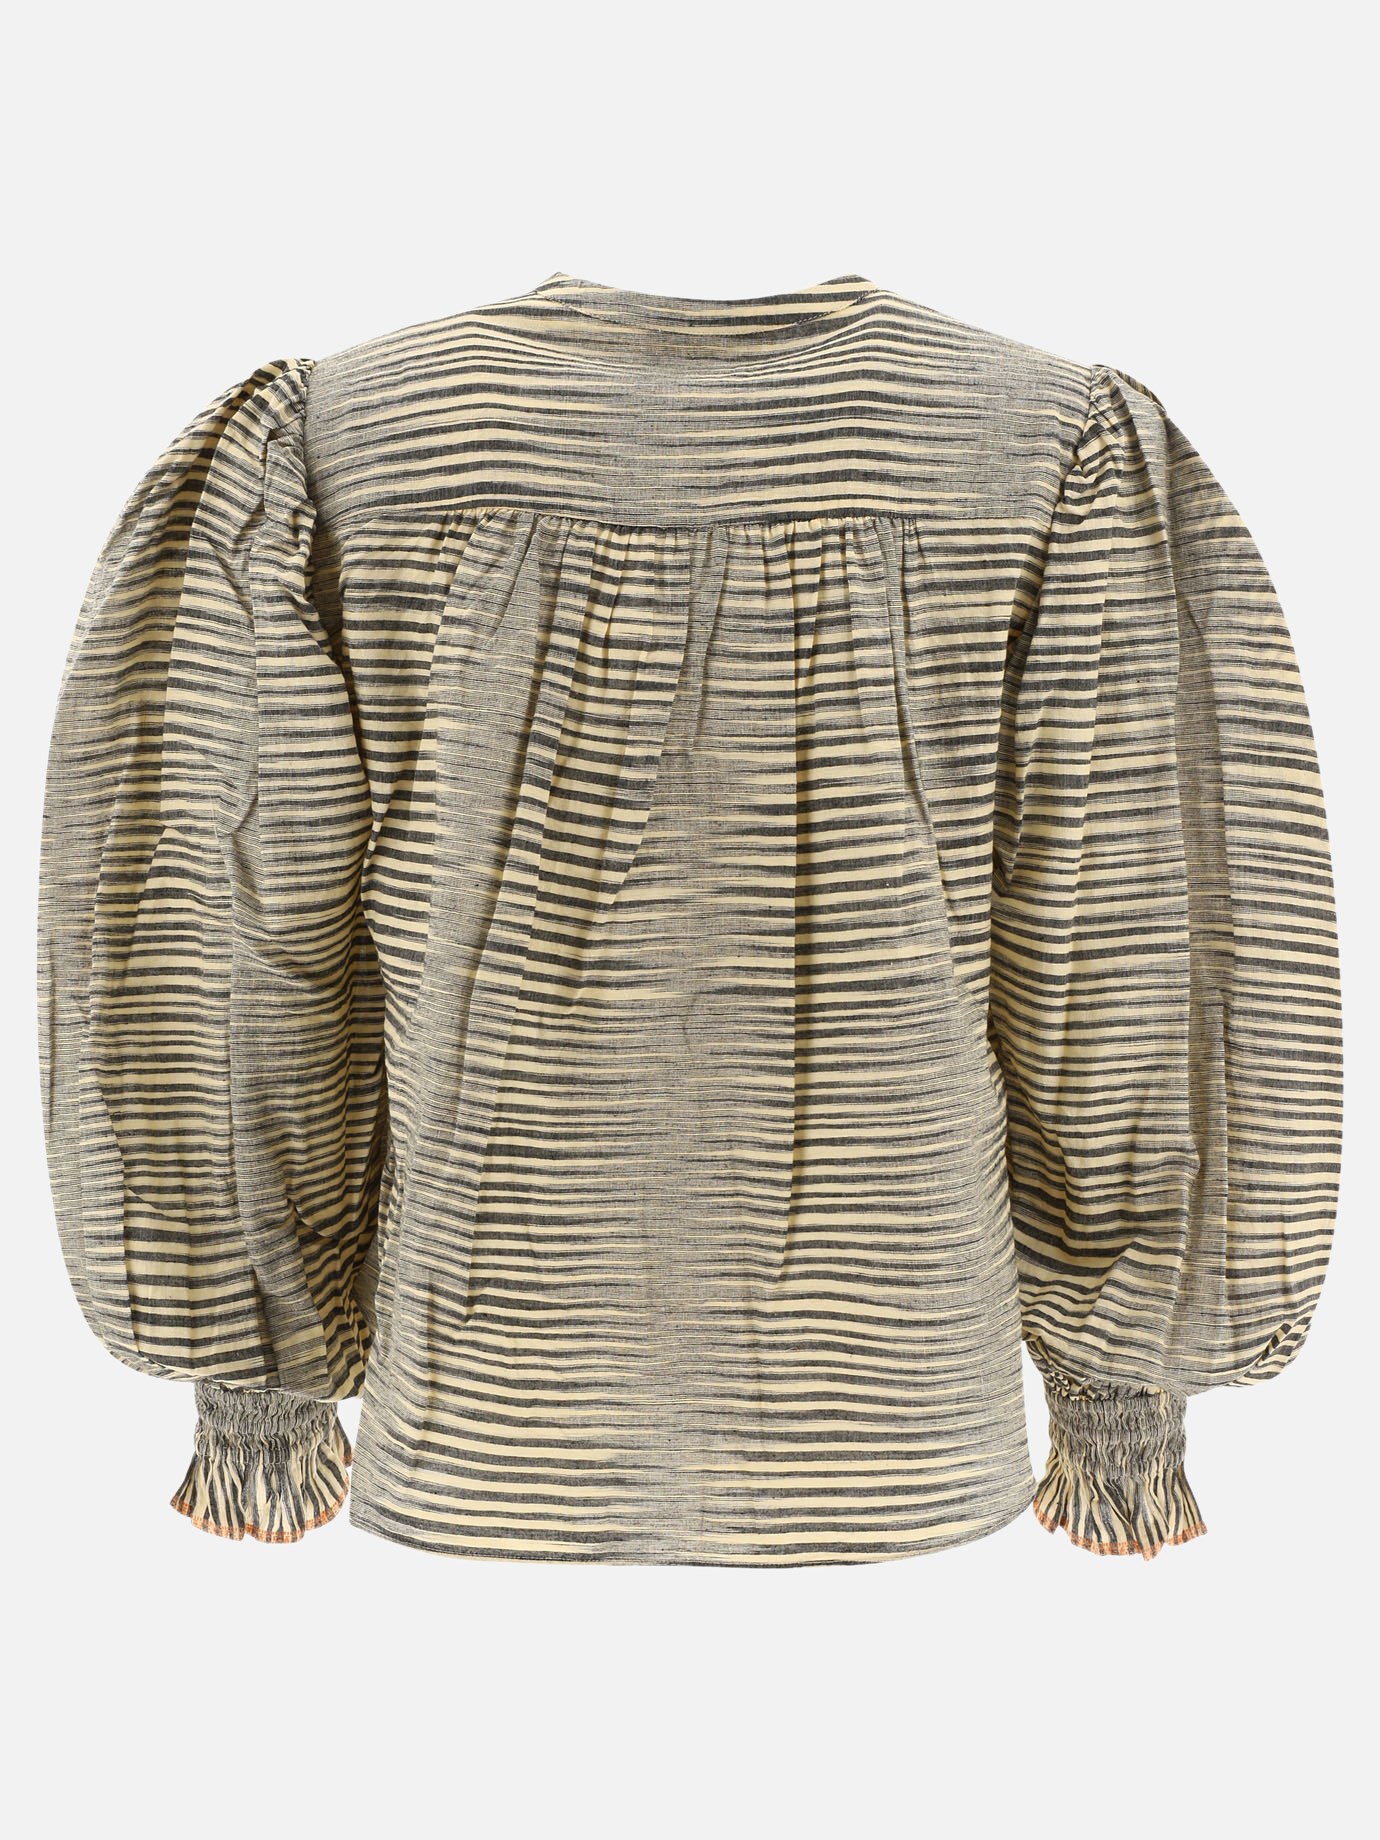  Finley  blouse by Ulla Johnson